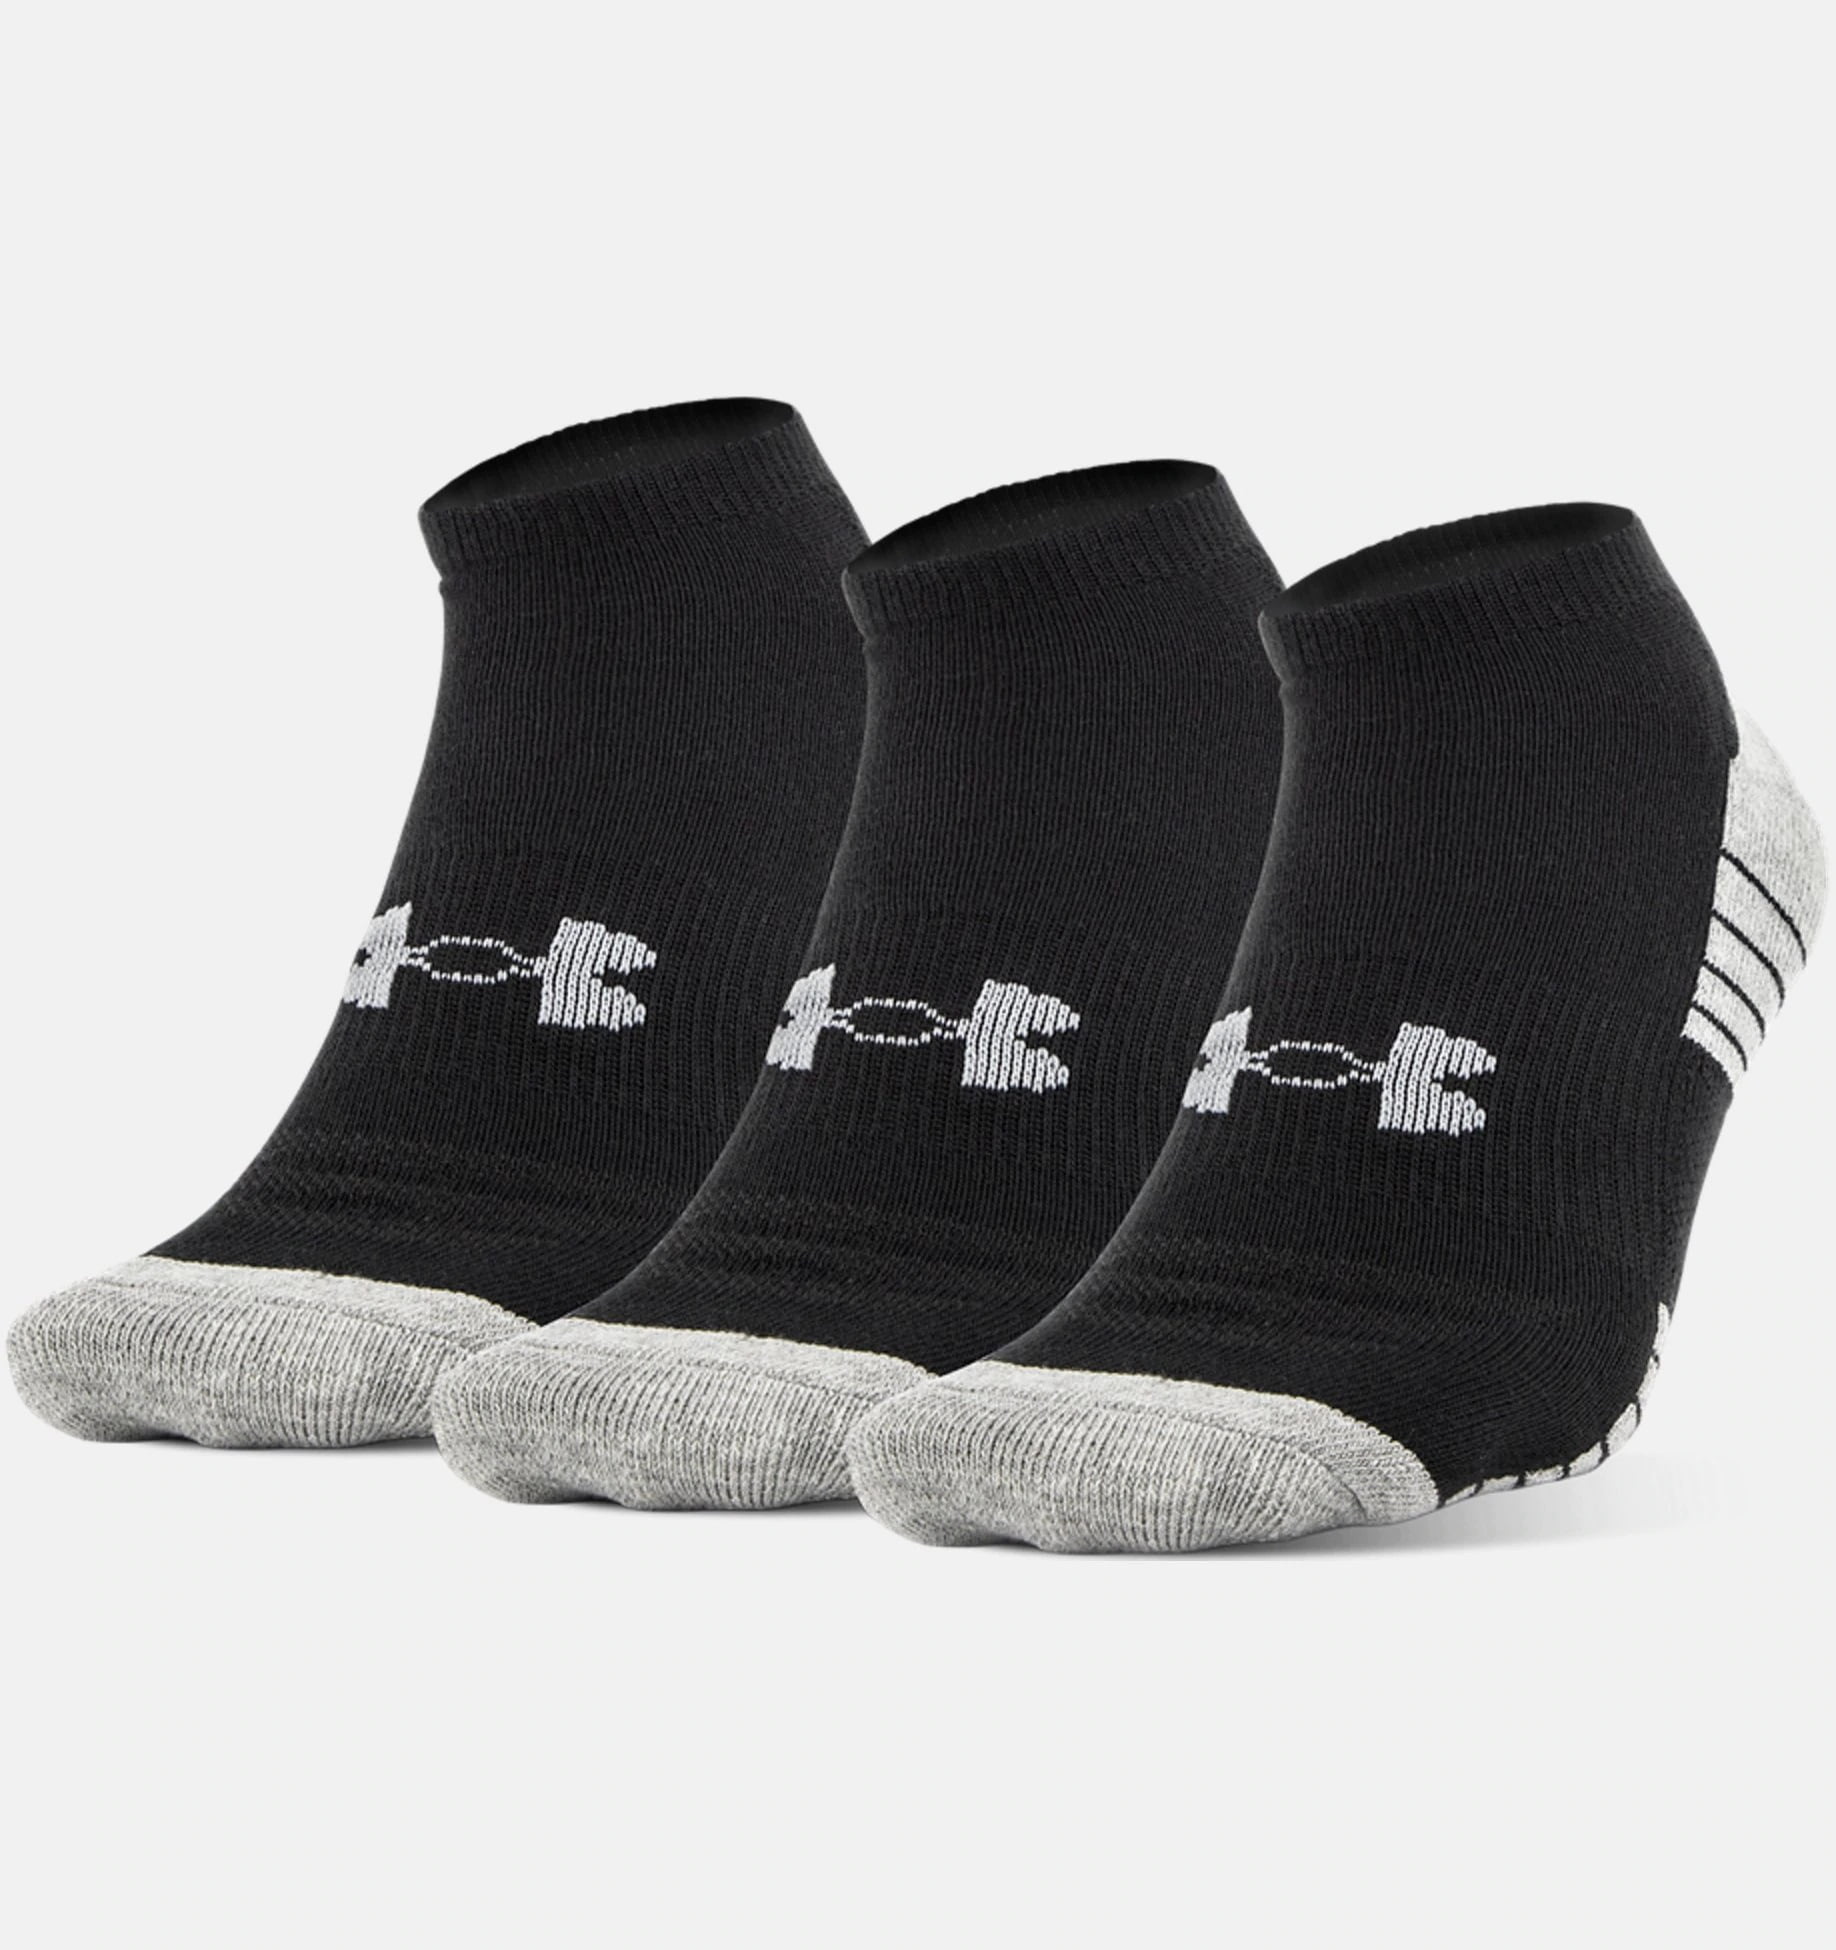 Under Armour Mens HeatGear Tech No-Show Running Socks Black Grey White Sports 